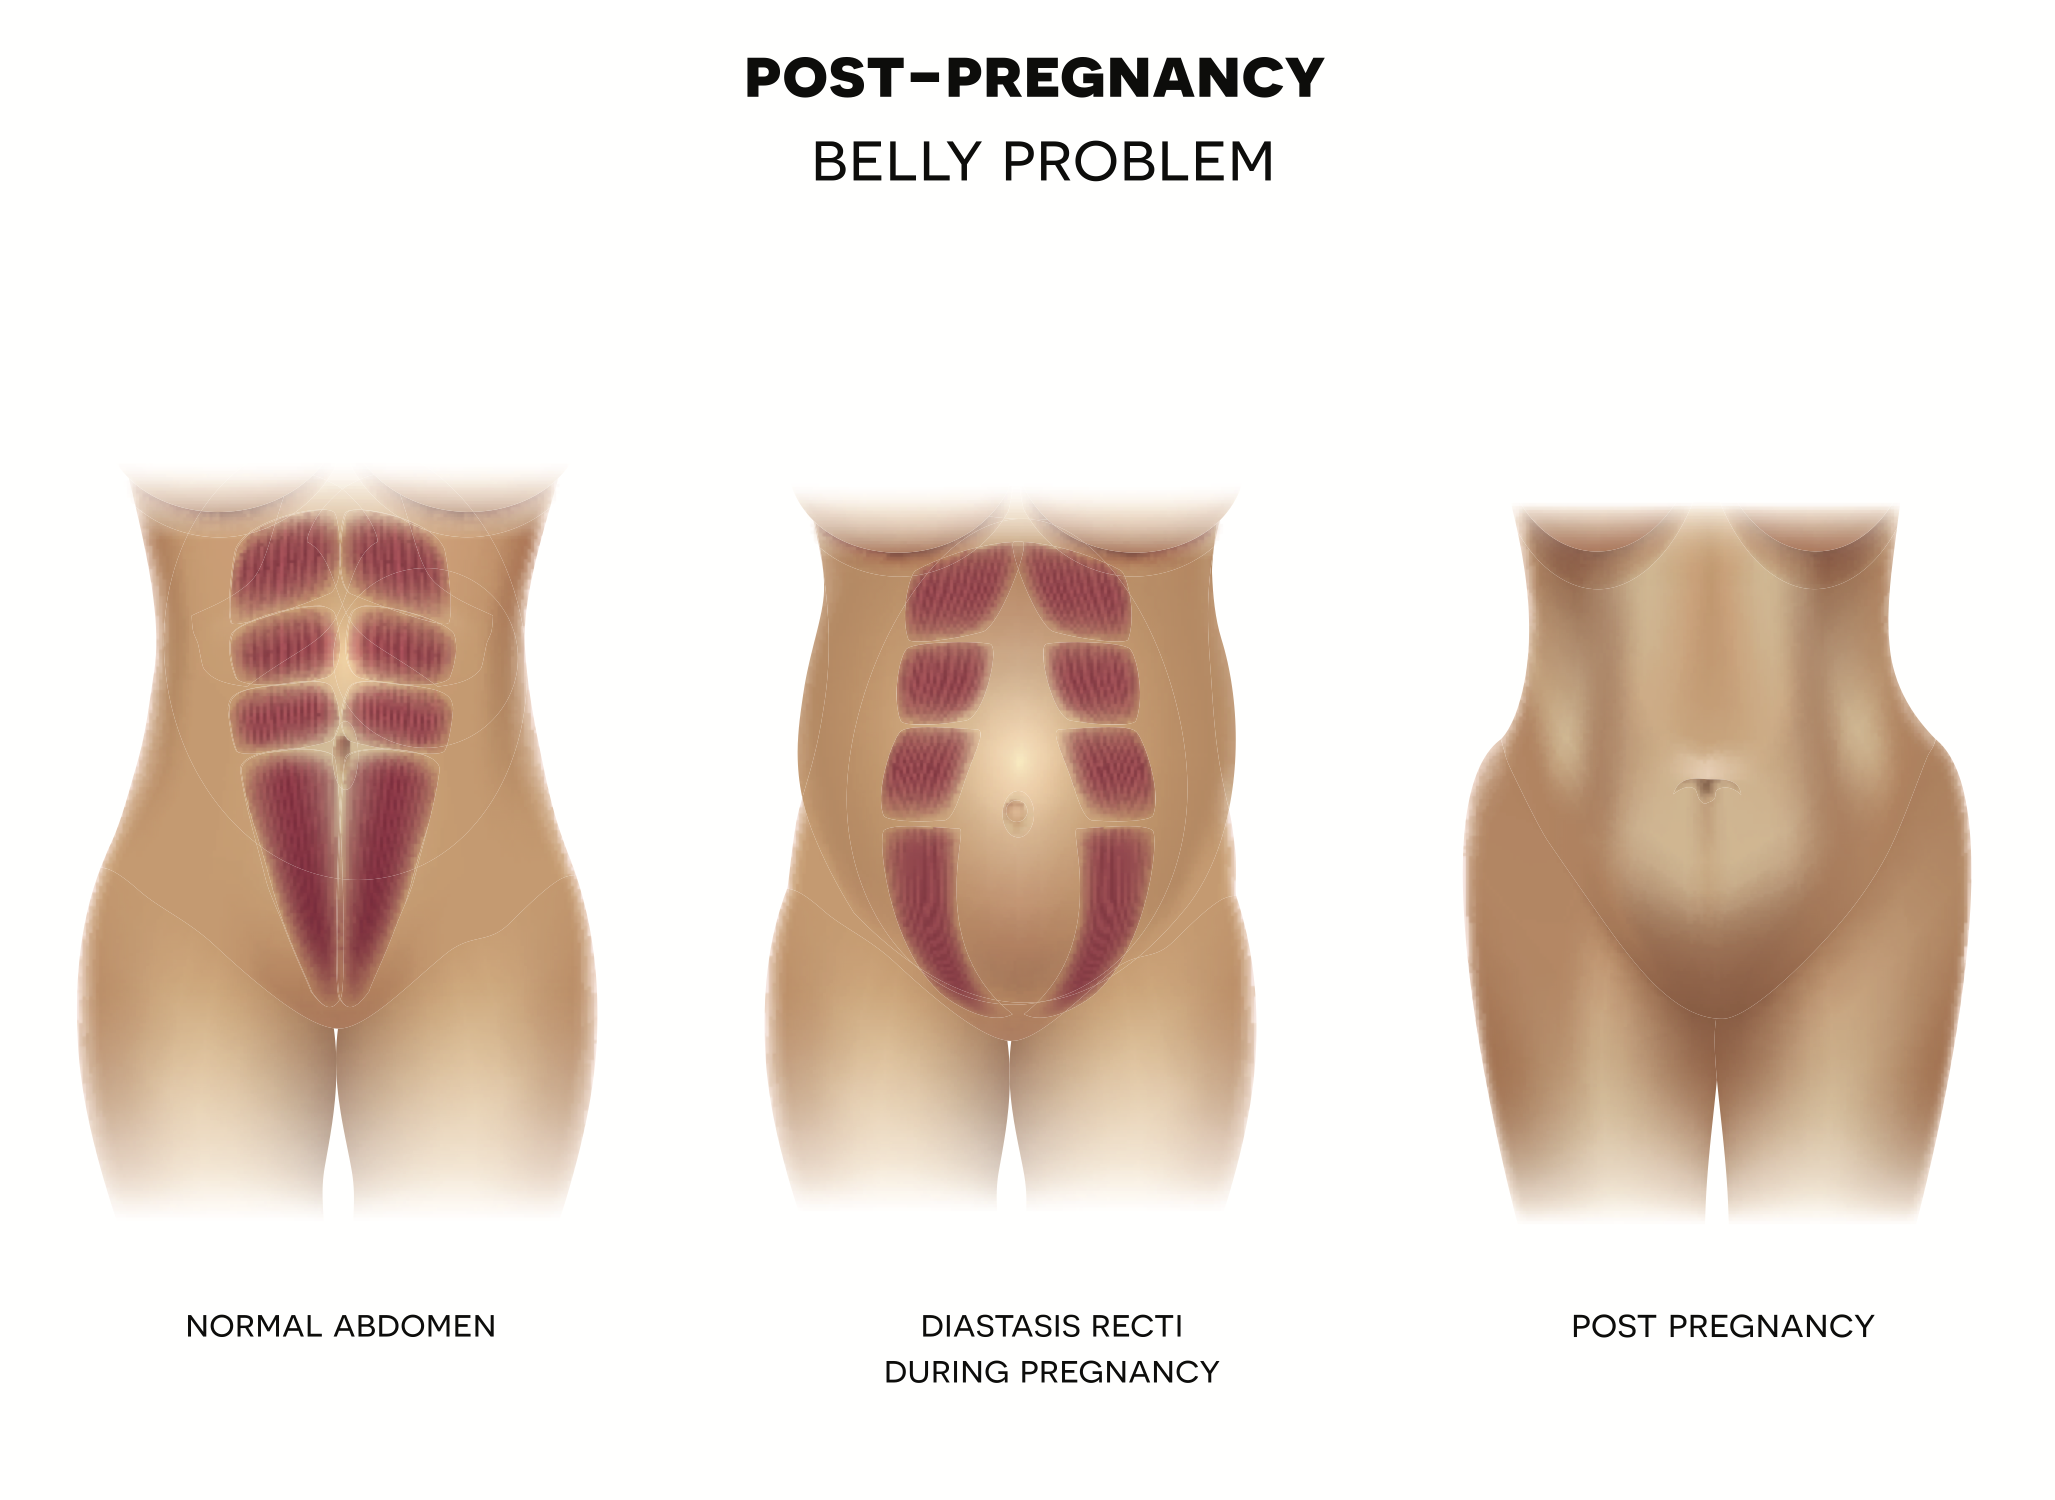 Diastasis Recti: What to Know About This Postpartum Problem